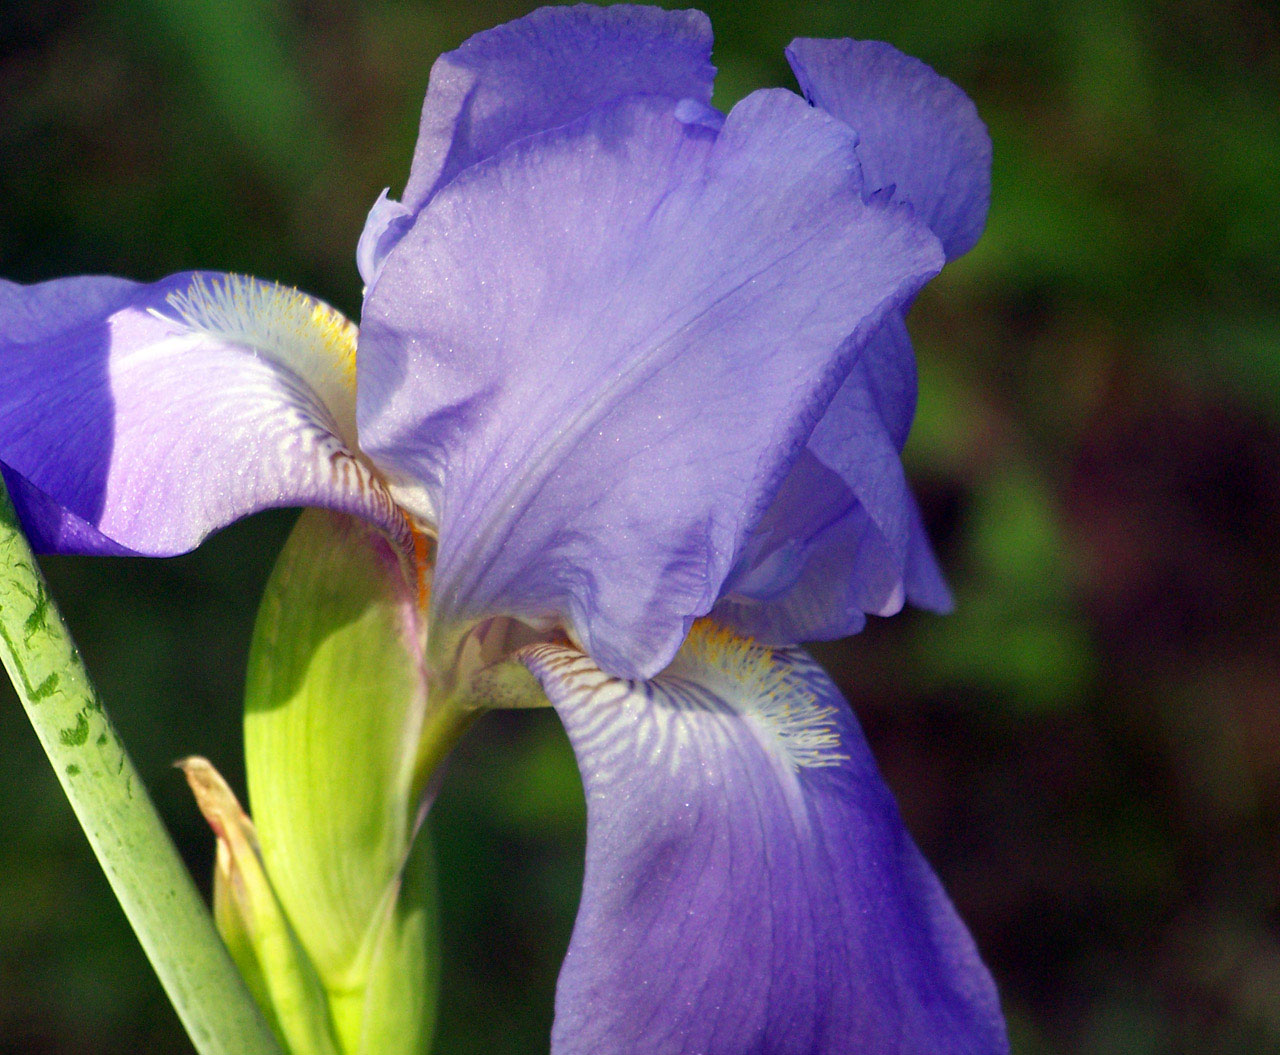 iris in spring